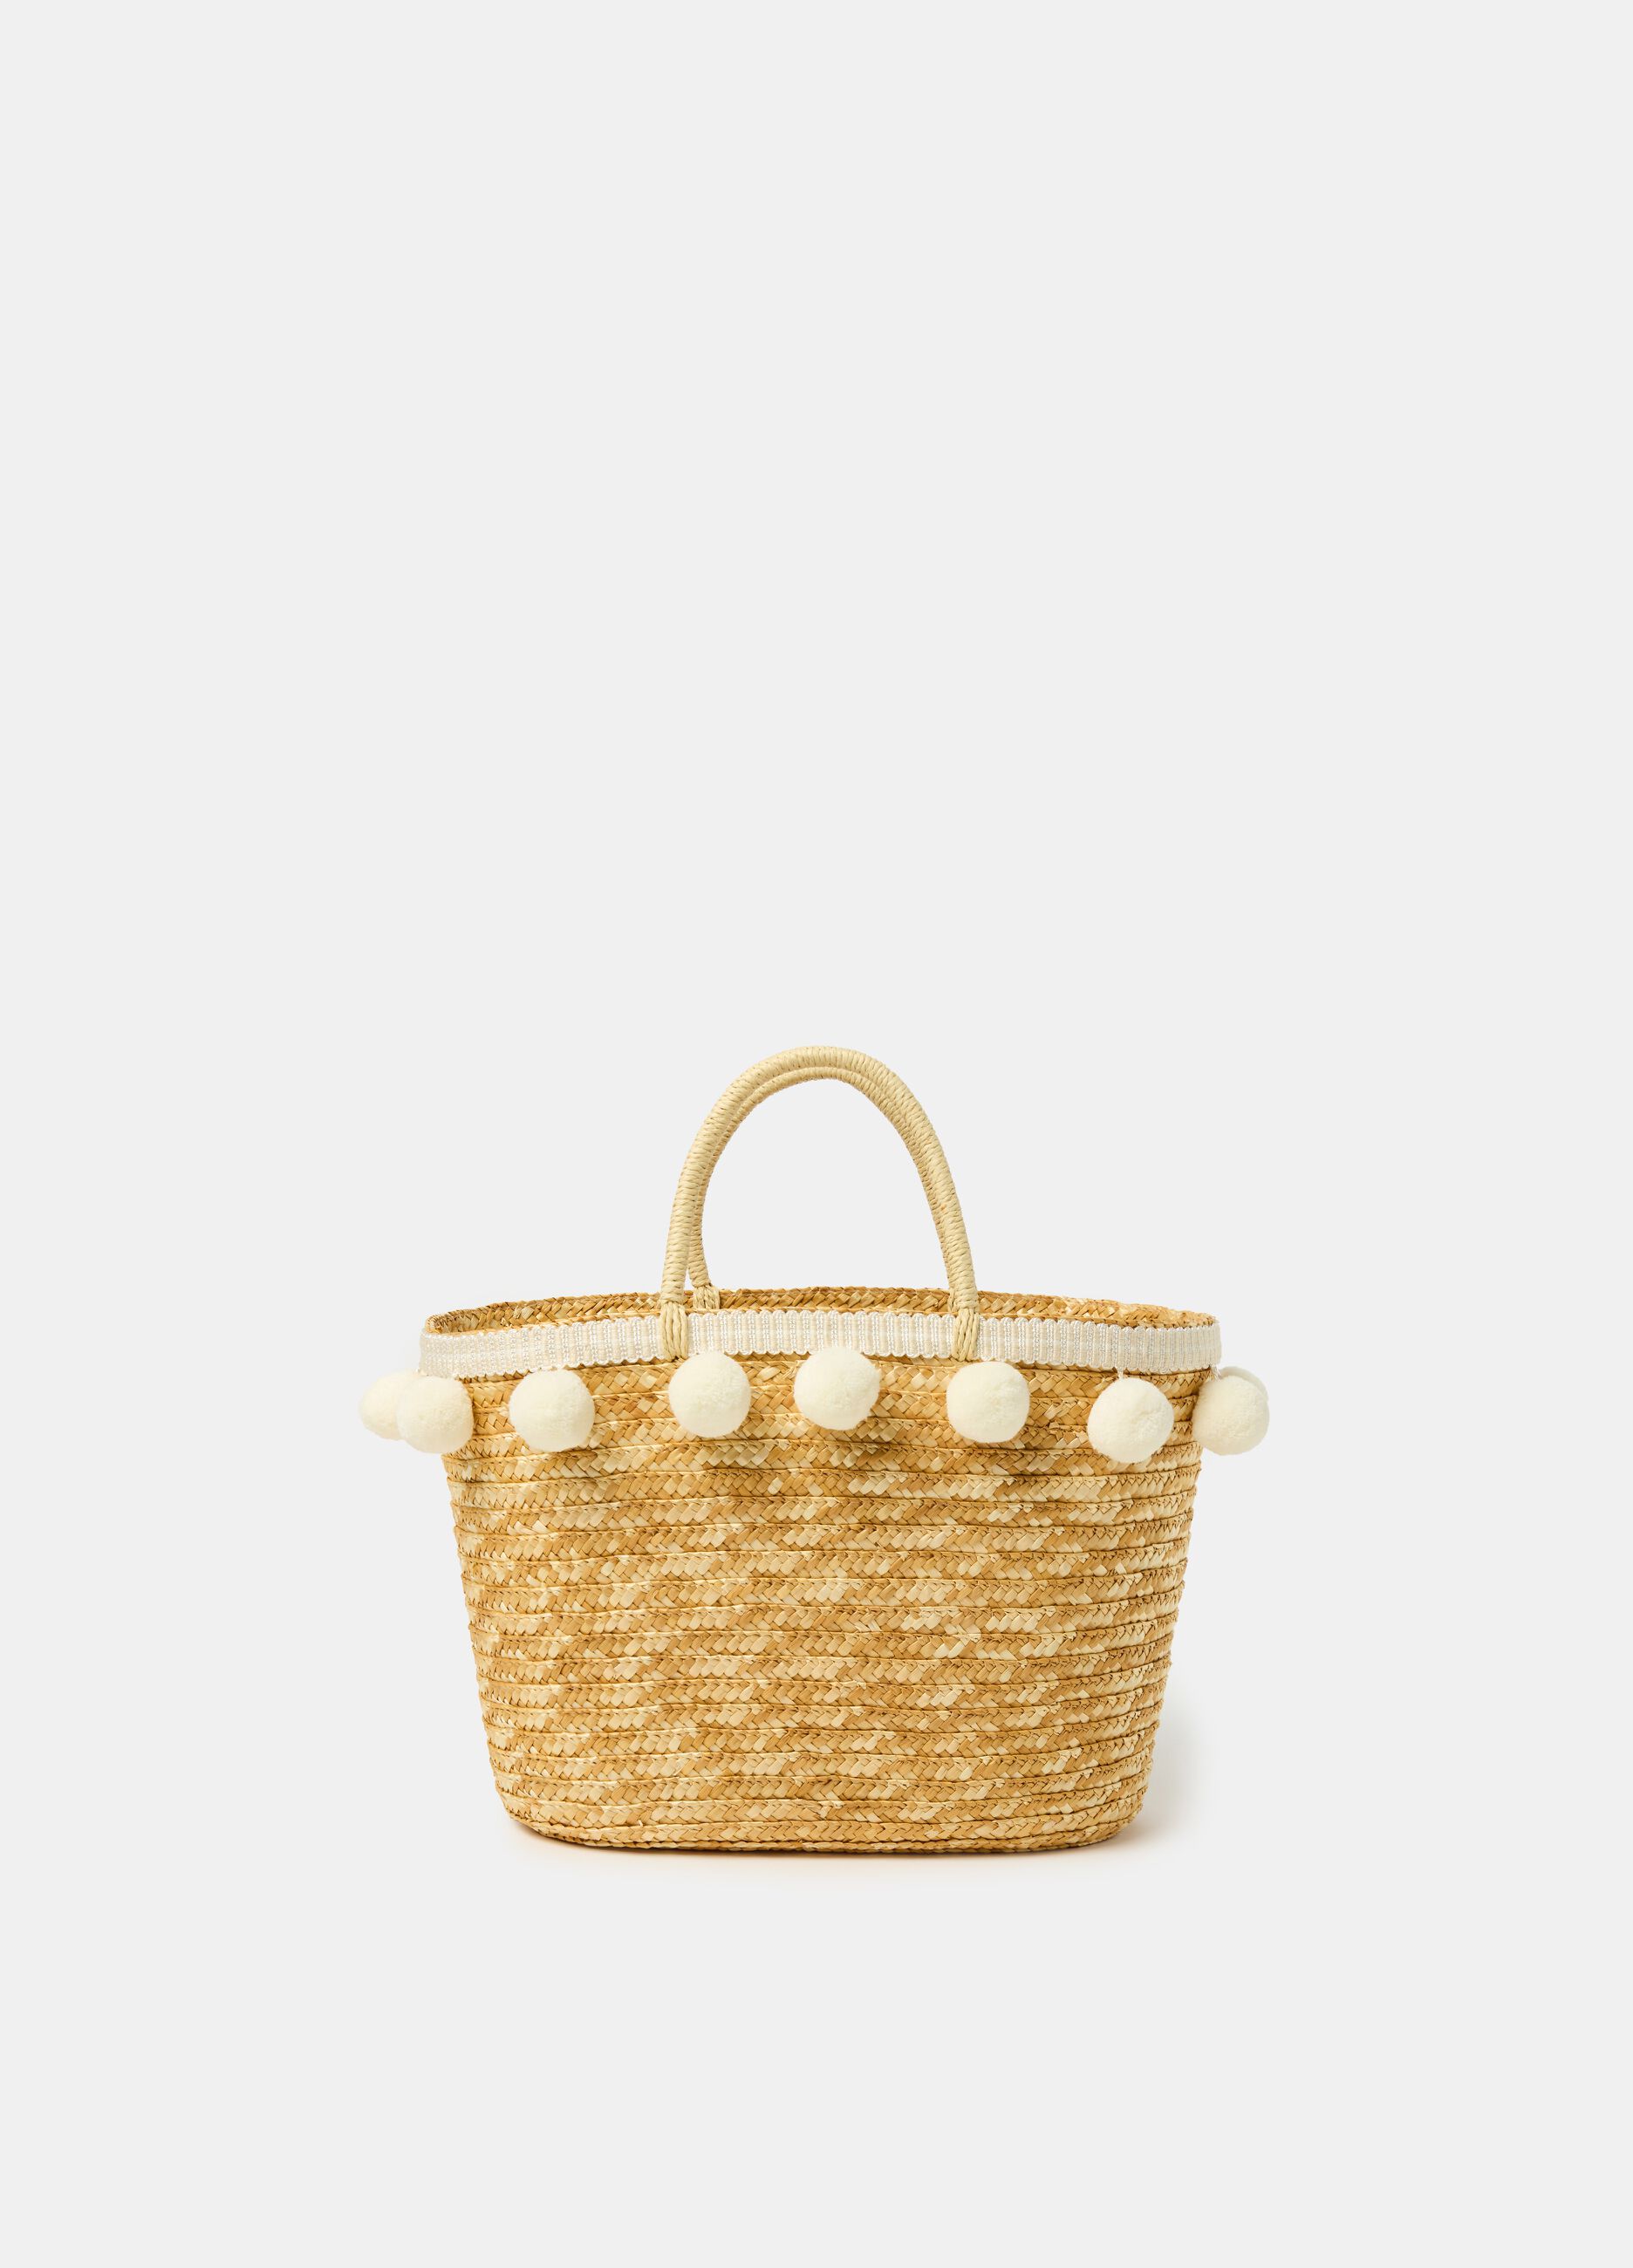 Positano straw bag with pompoms